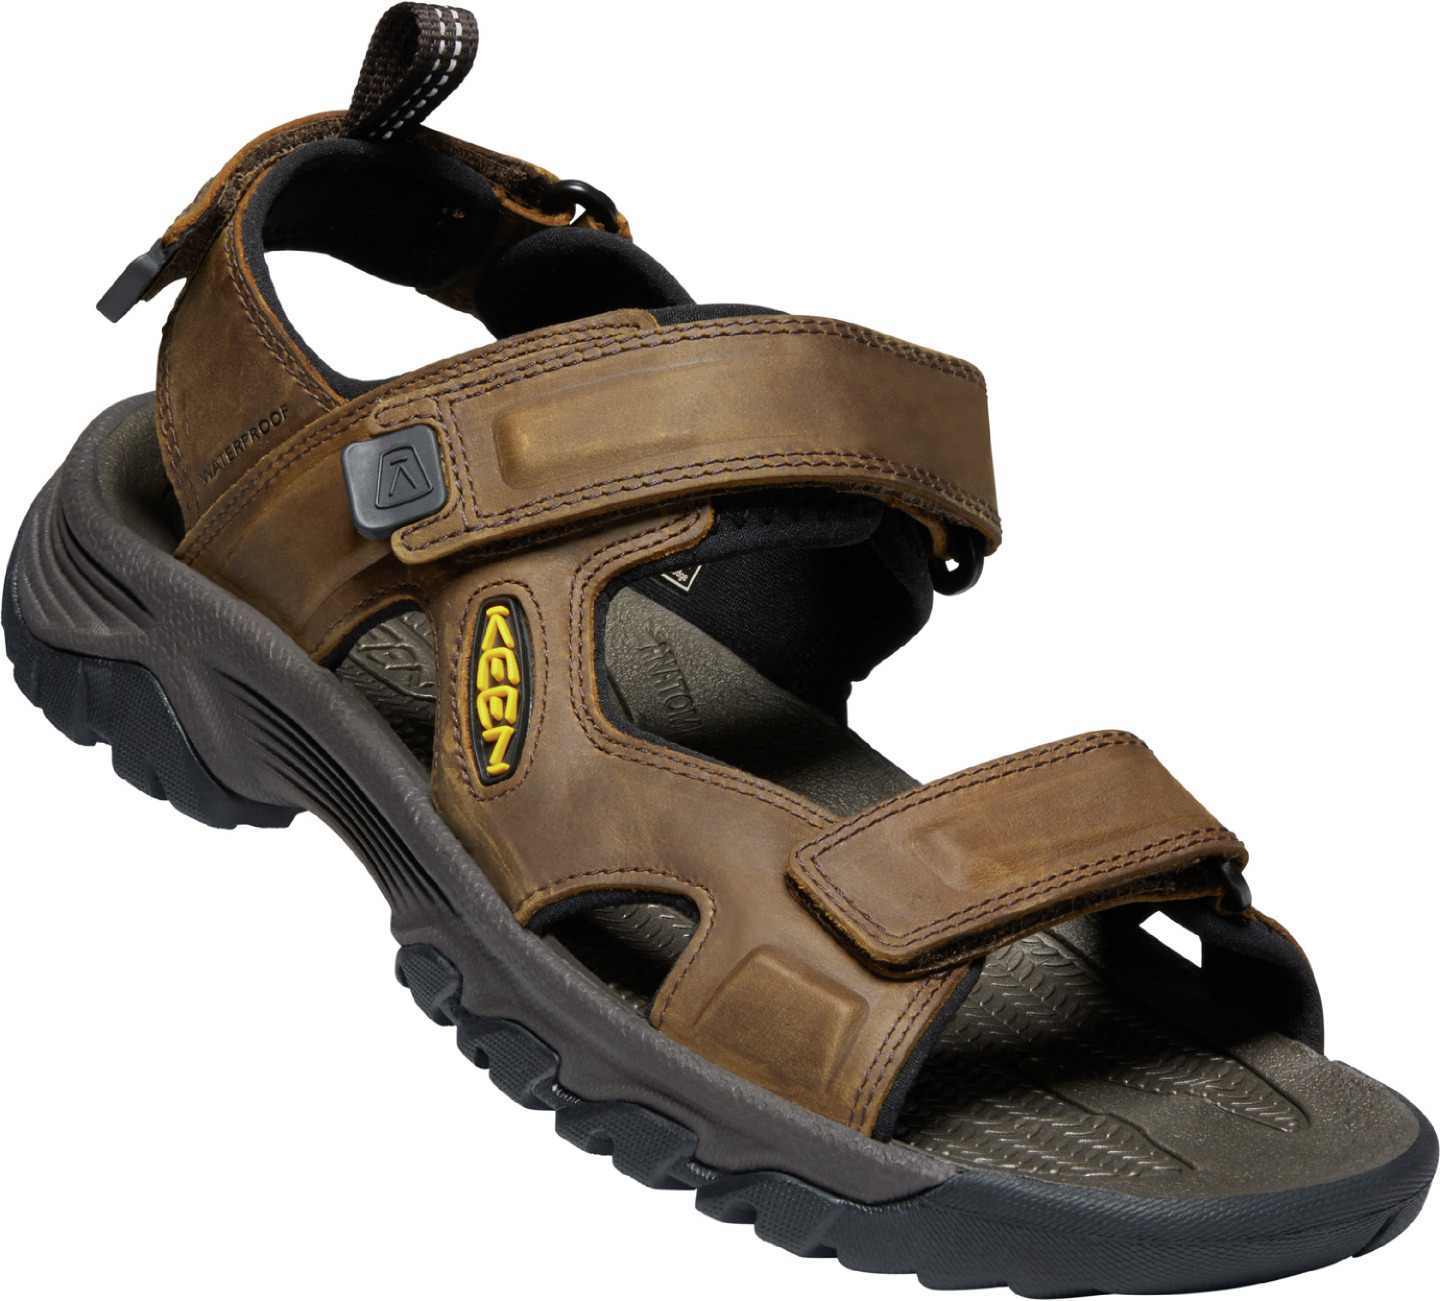 Keen pánské sandály Targhee III Open Toe Sandal Men - Bison/Mulch Barva: bison/mulch, Velikost: 7,5 UK (41 EU / 26,5 cm)